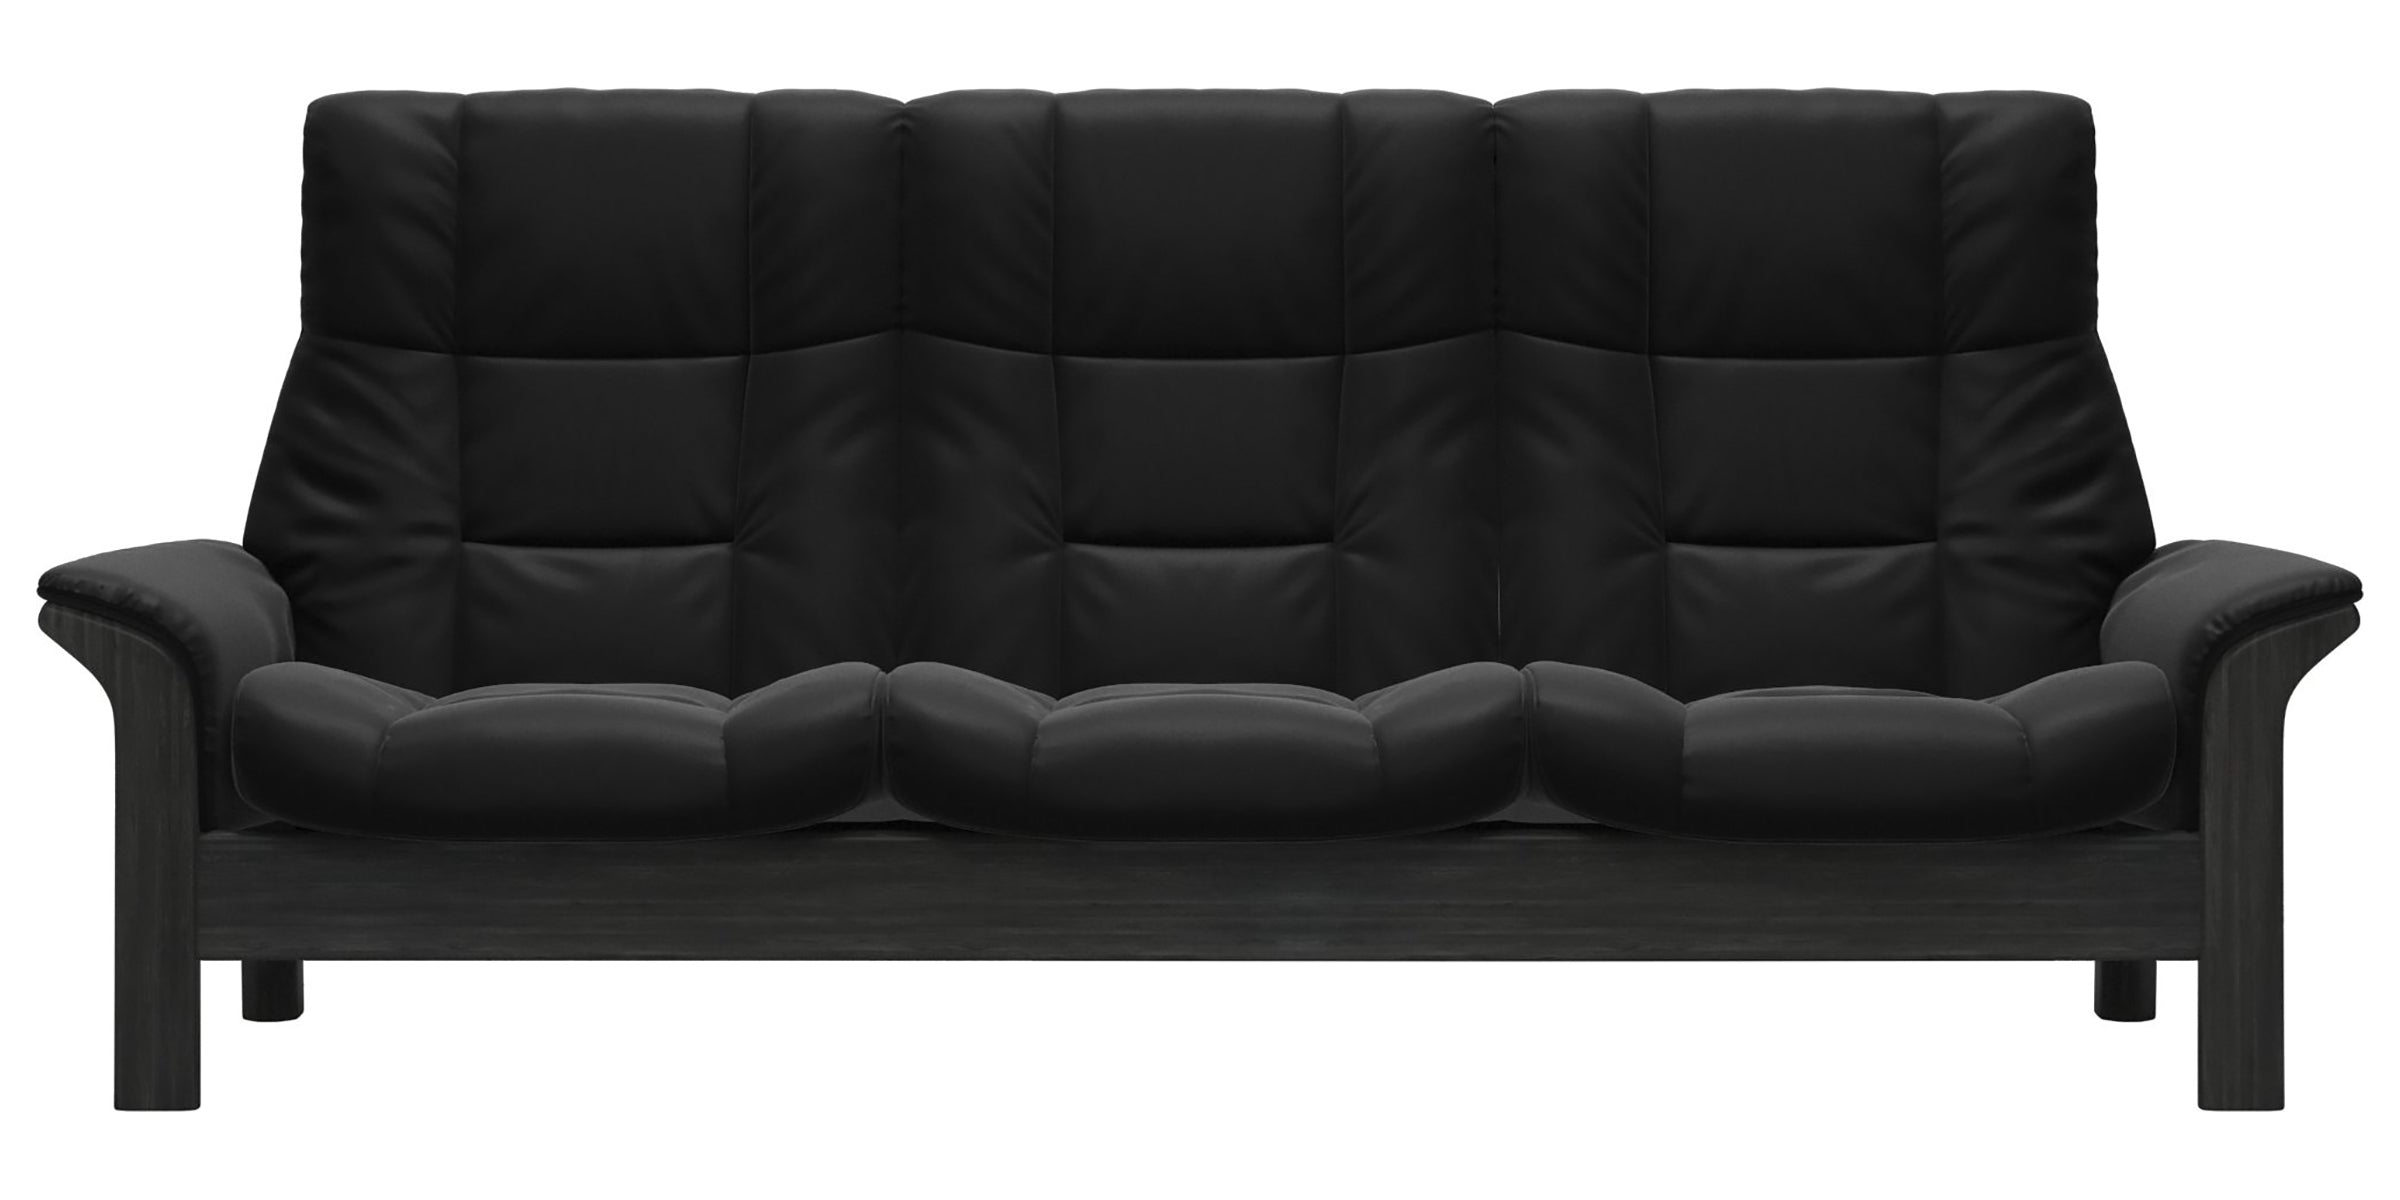 Paloma Leather Black and Grey Base | Stressless Buckingham 3-Seater High Back Sofa | Valley Ridge Furniture